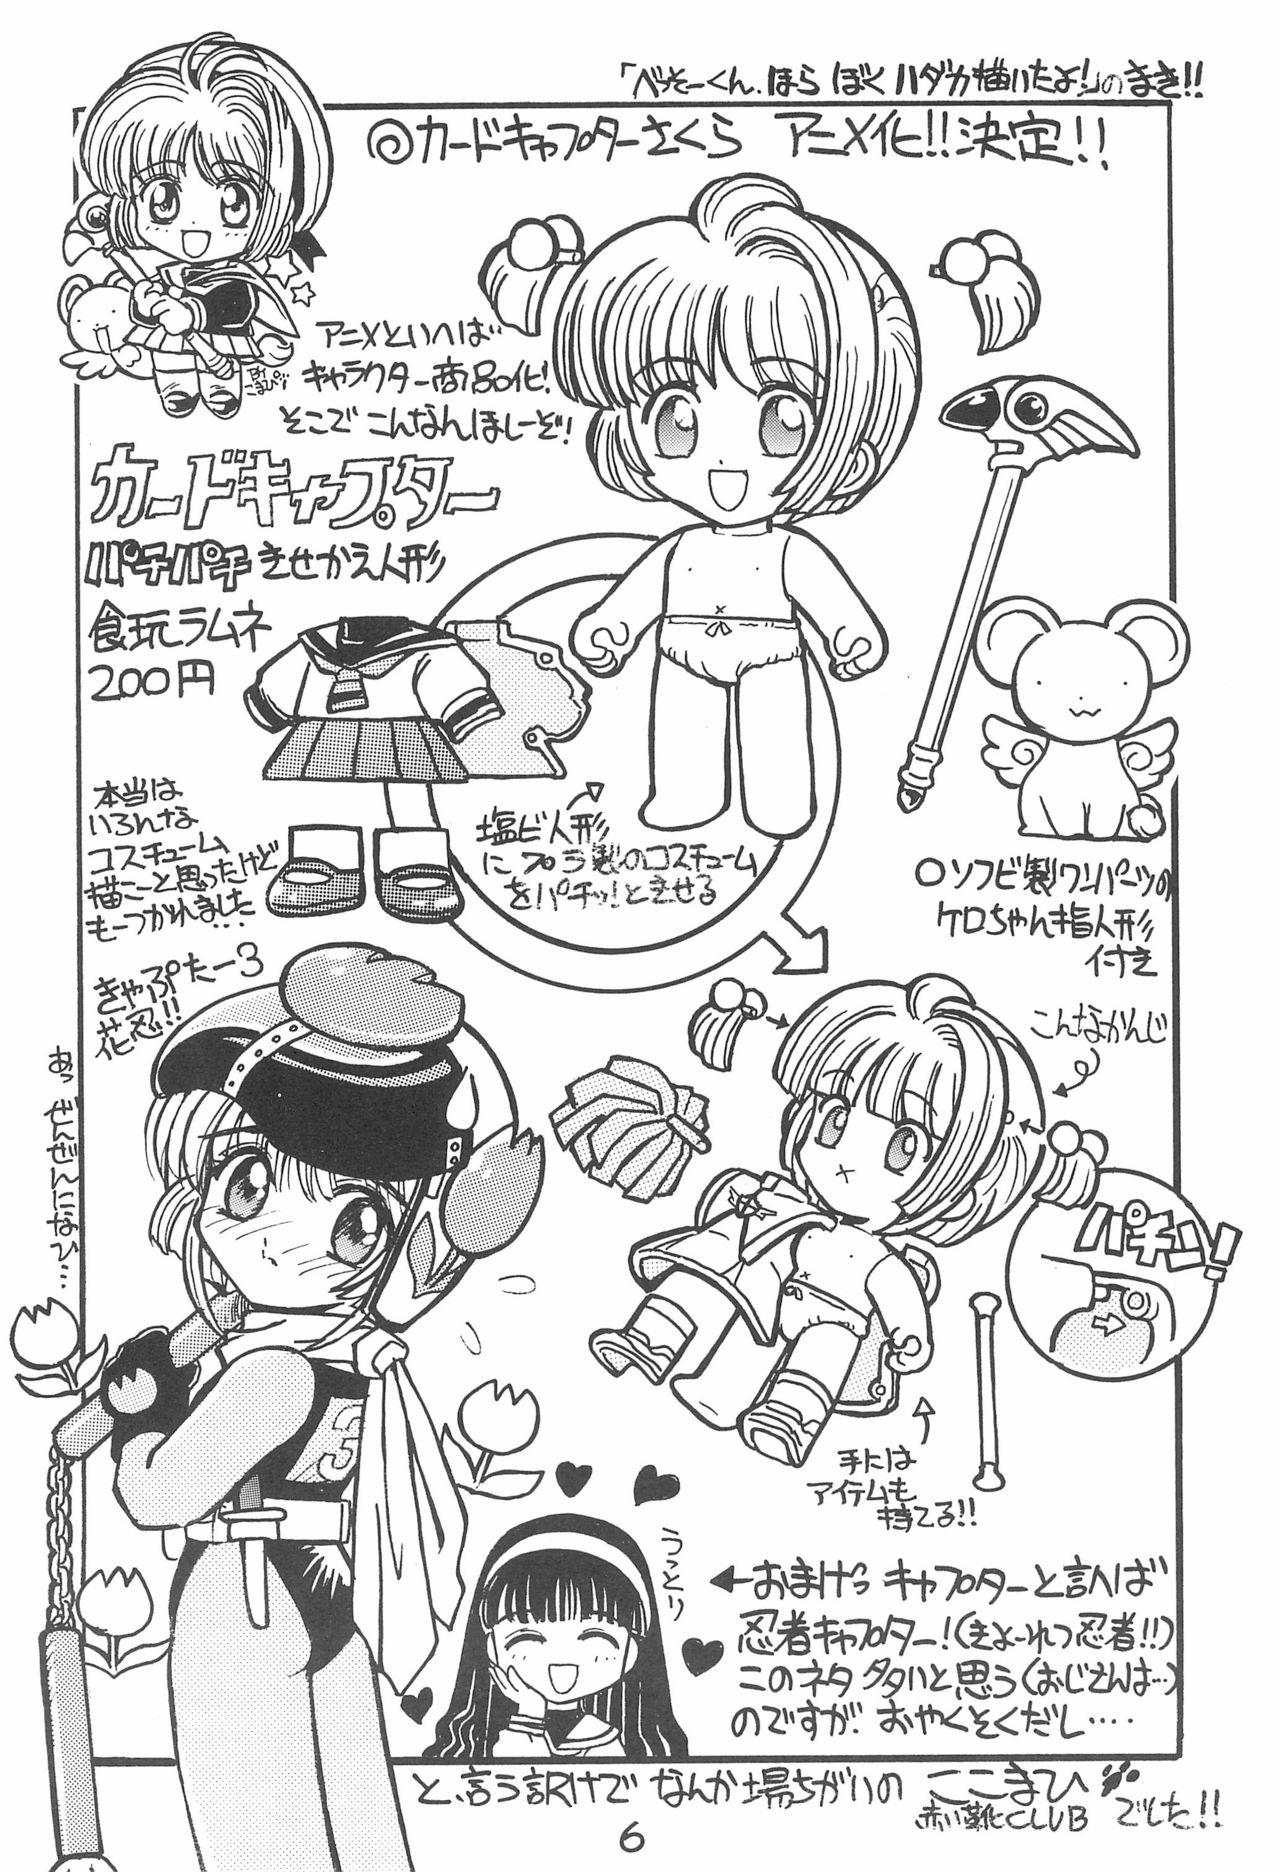 Bucetuda WILD SNAKE VOL.4 - Cardcaptor sakura Baile - Page 6